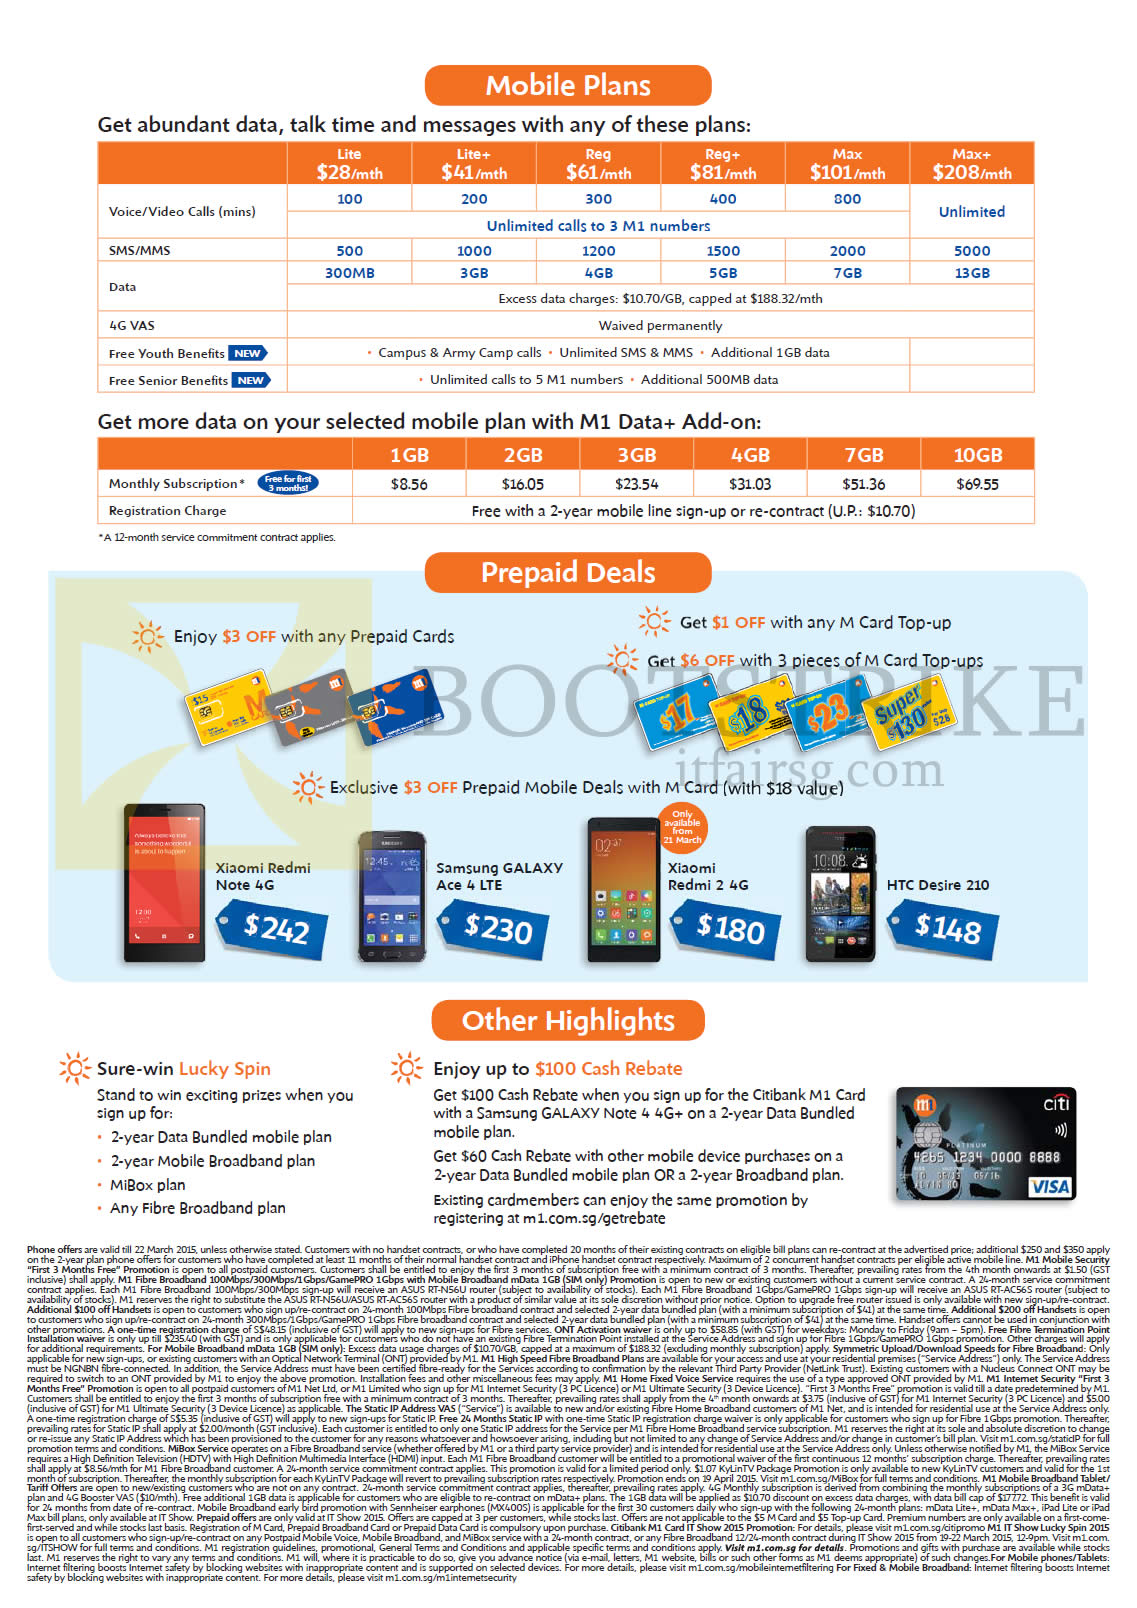 IT SHOW 2015 price list image brochure of M1 Mobile Plans, Prepaid M Card, Xiamo Redmi Note 4G, Redmi 2 Samsung Galaxy Ace 4, HTC Desire 210, Lucky Spin, Cash Rebate